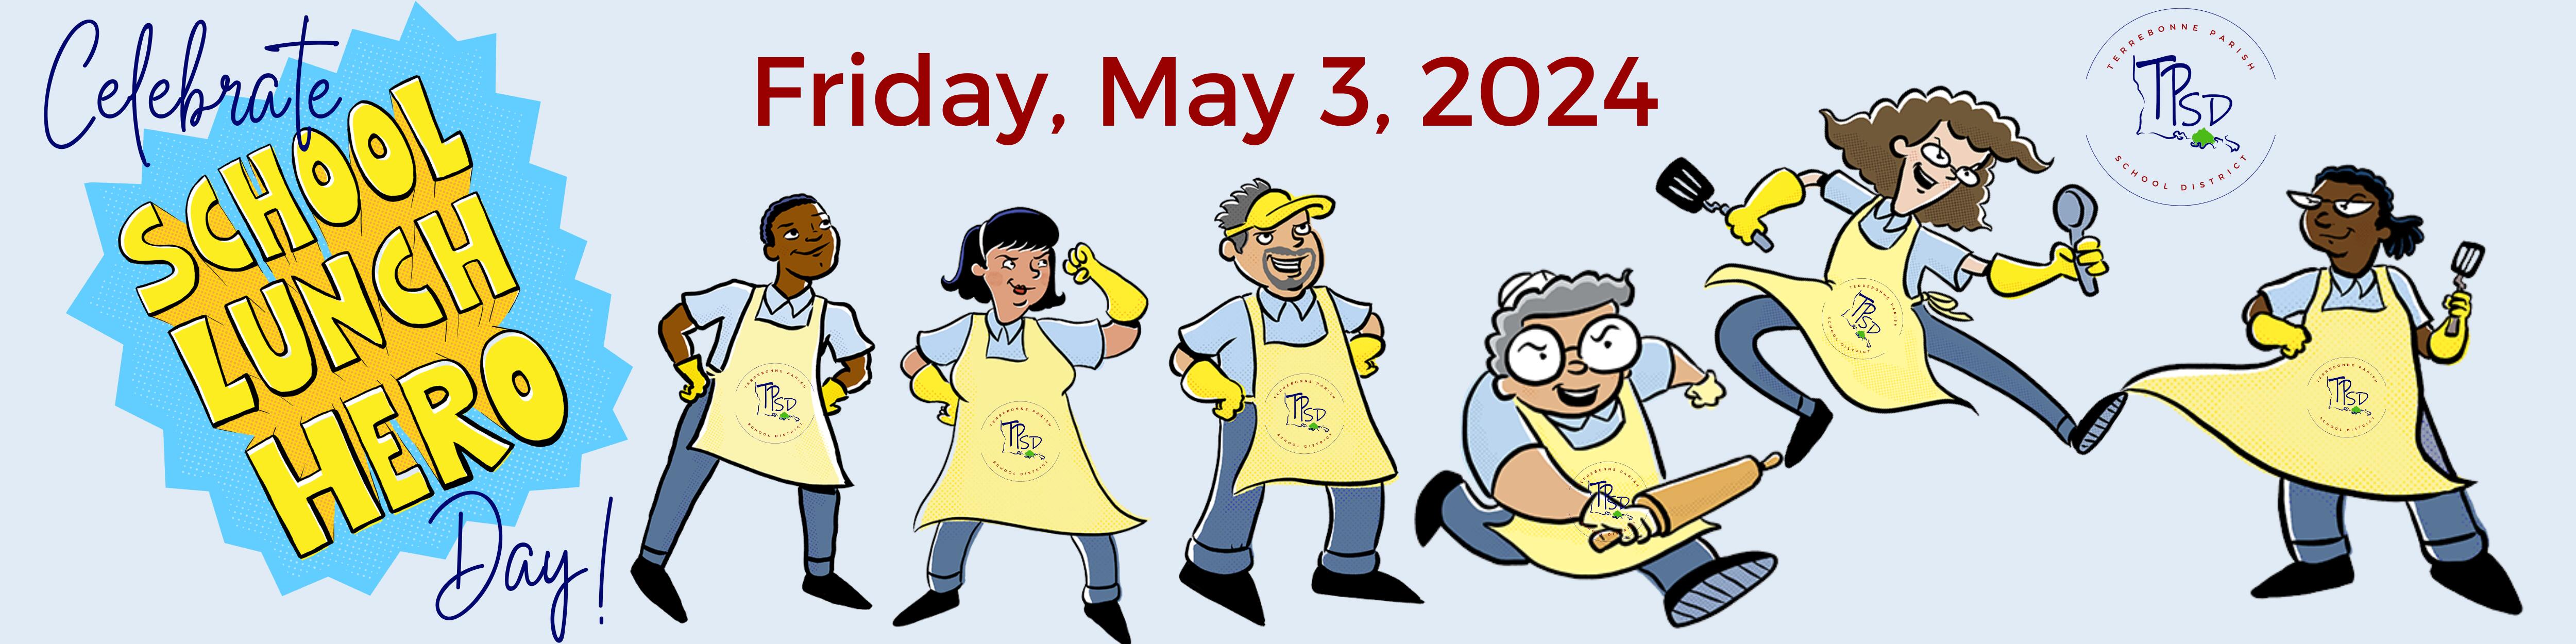 School Lunch Hero Day - Friday, May 3, 2024